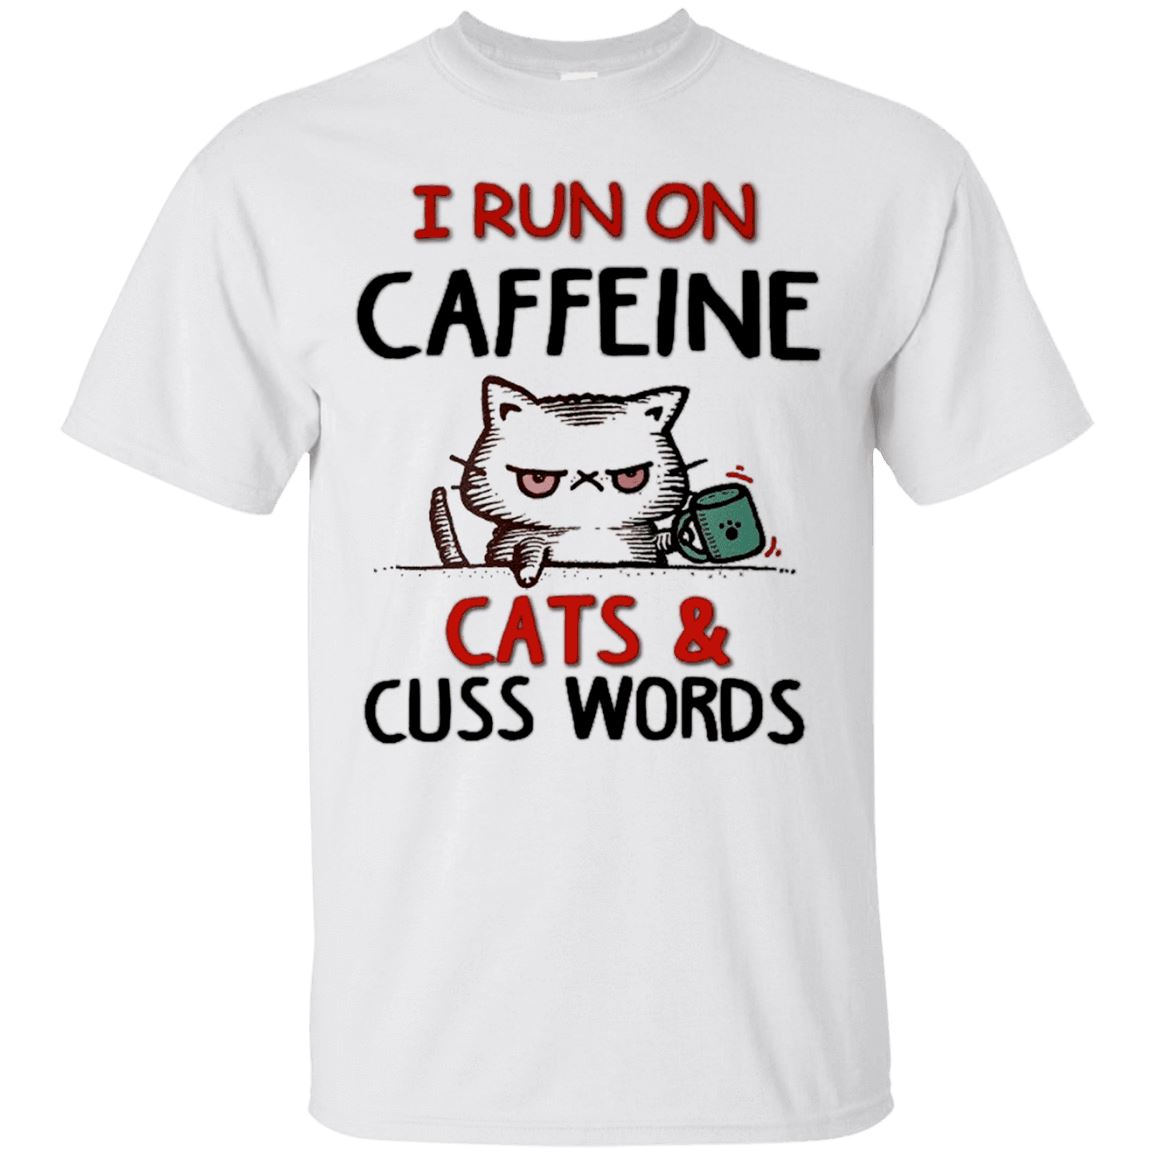 Cat Tee - I Run On Caffeine, Cats & Cuss Words - CatsForLife